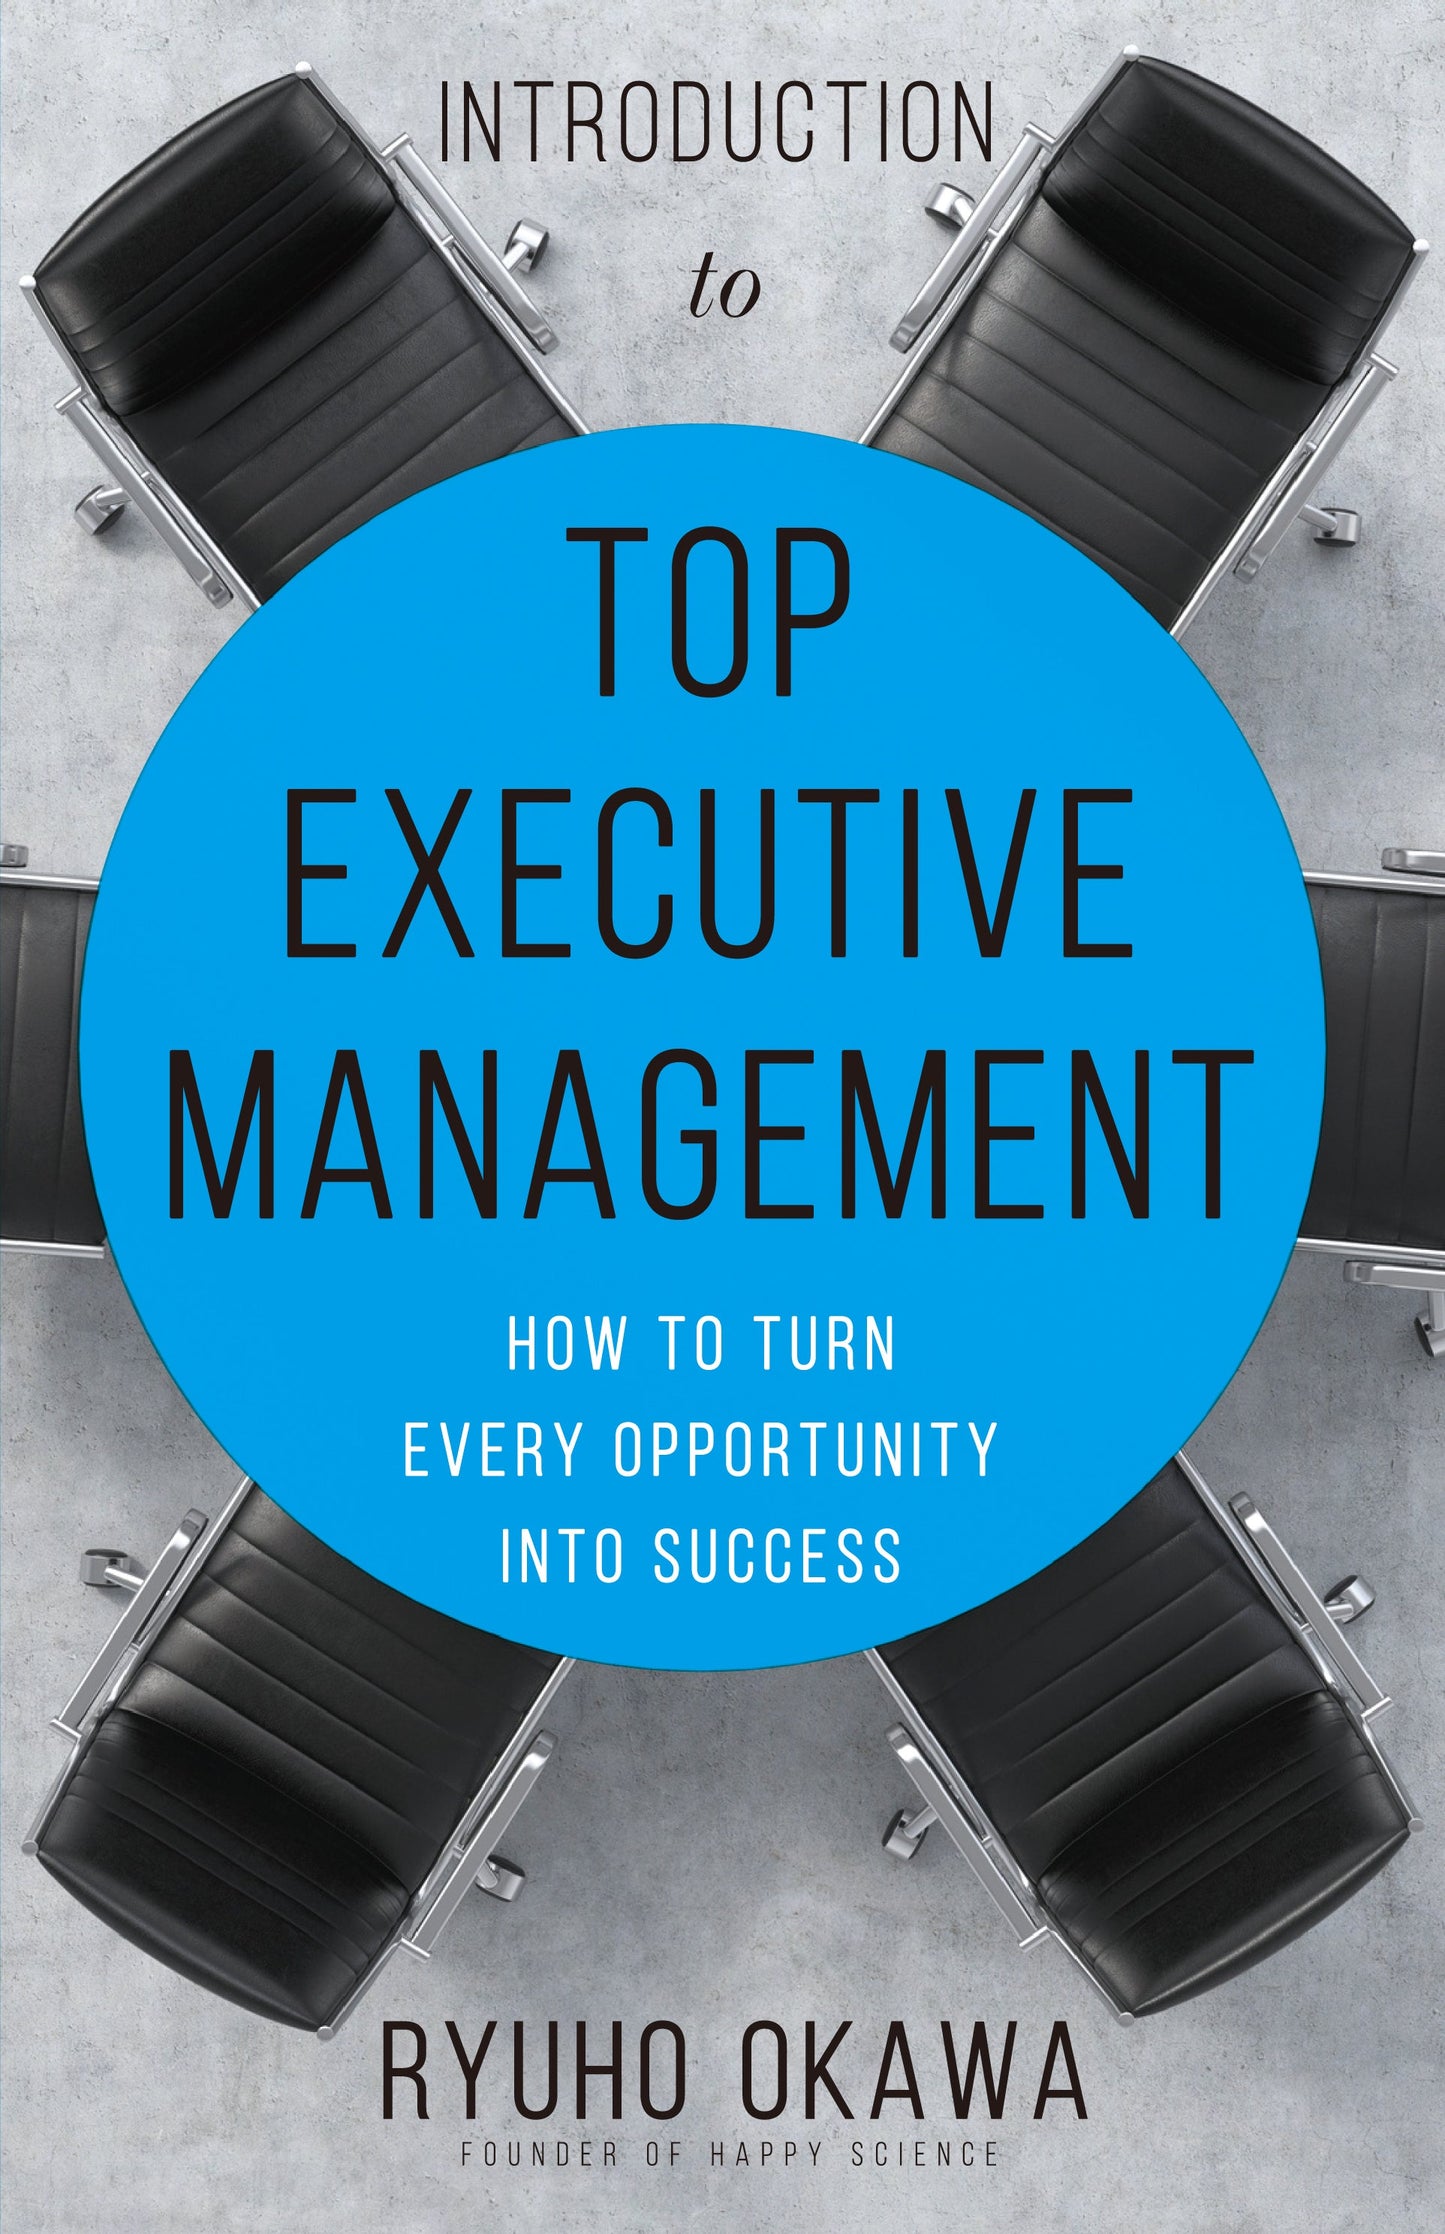 Introduction to Top Executive Management : Turn Every Opportunity Into Success, Ryuho Okawa, English - IRH Press International